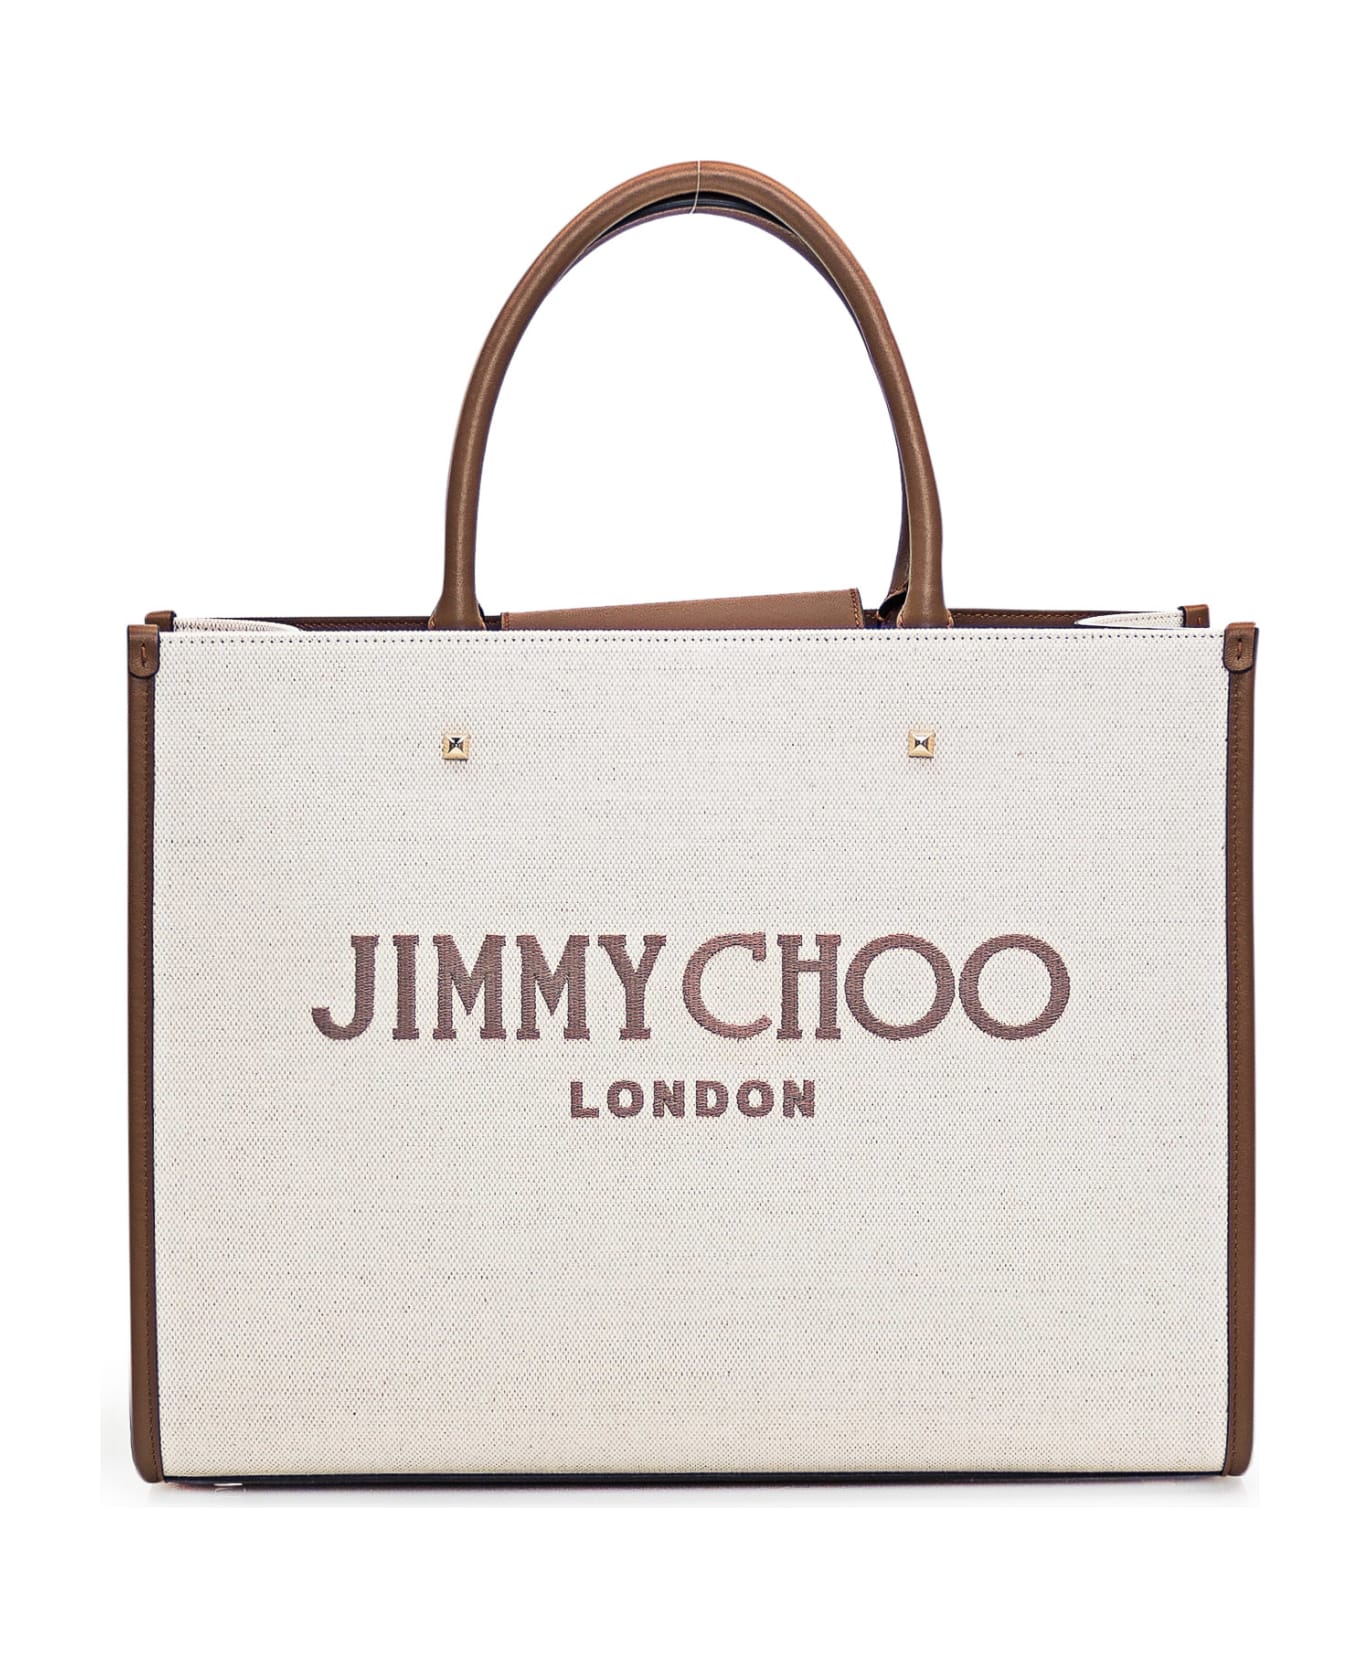 Jimmy Choo Tote Avenue M Bag - NATURAL/TAUPE/DARK TAN/LIGHT G